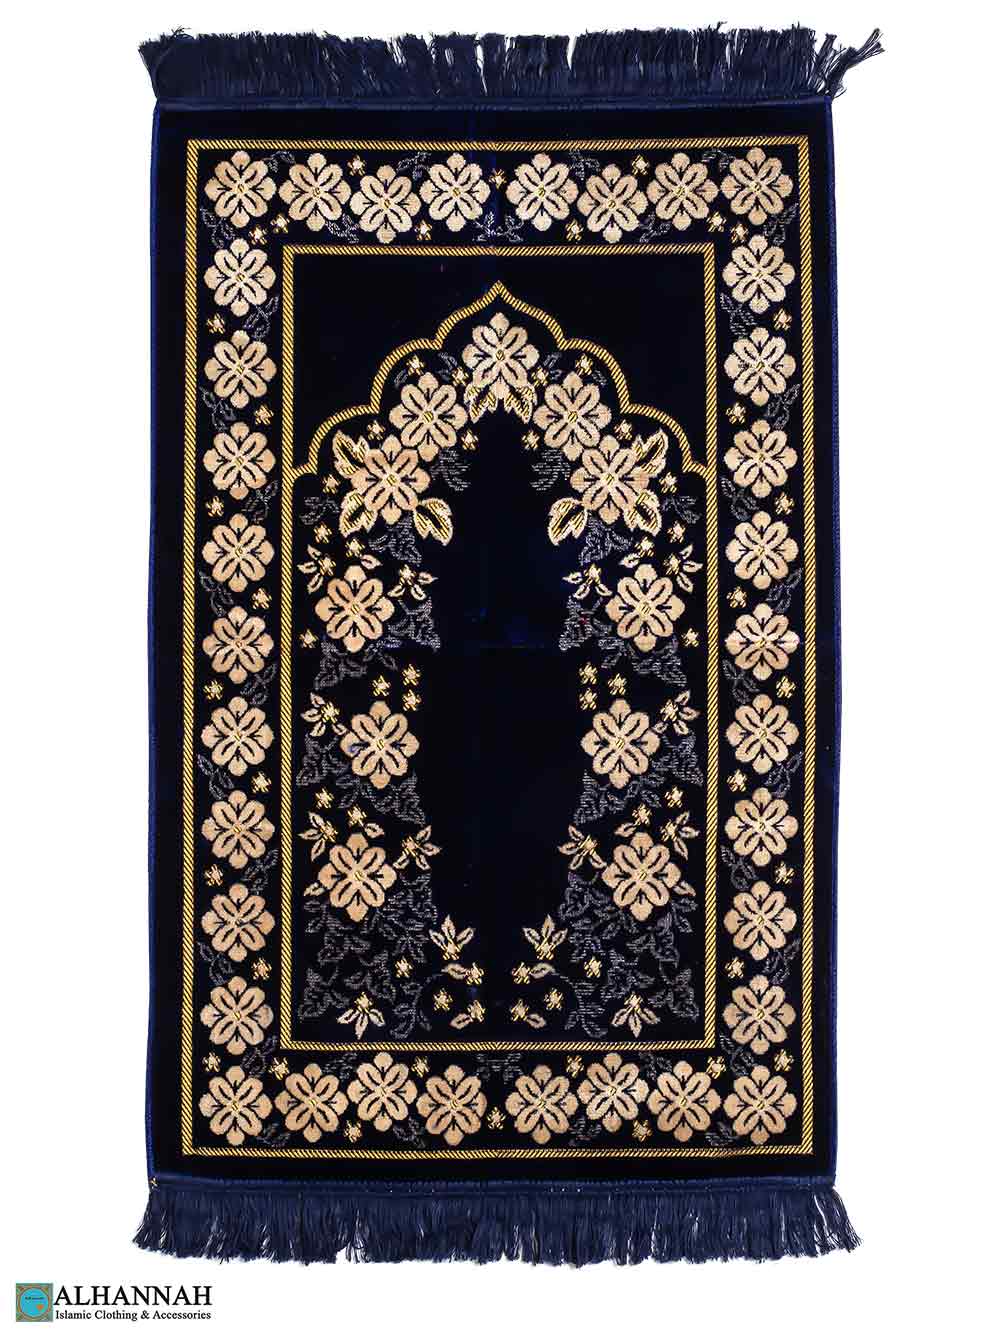 Deluxe Islamic Prayer Rug - Navy